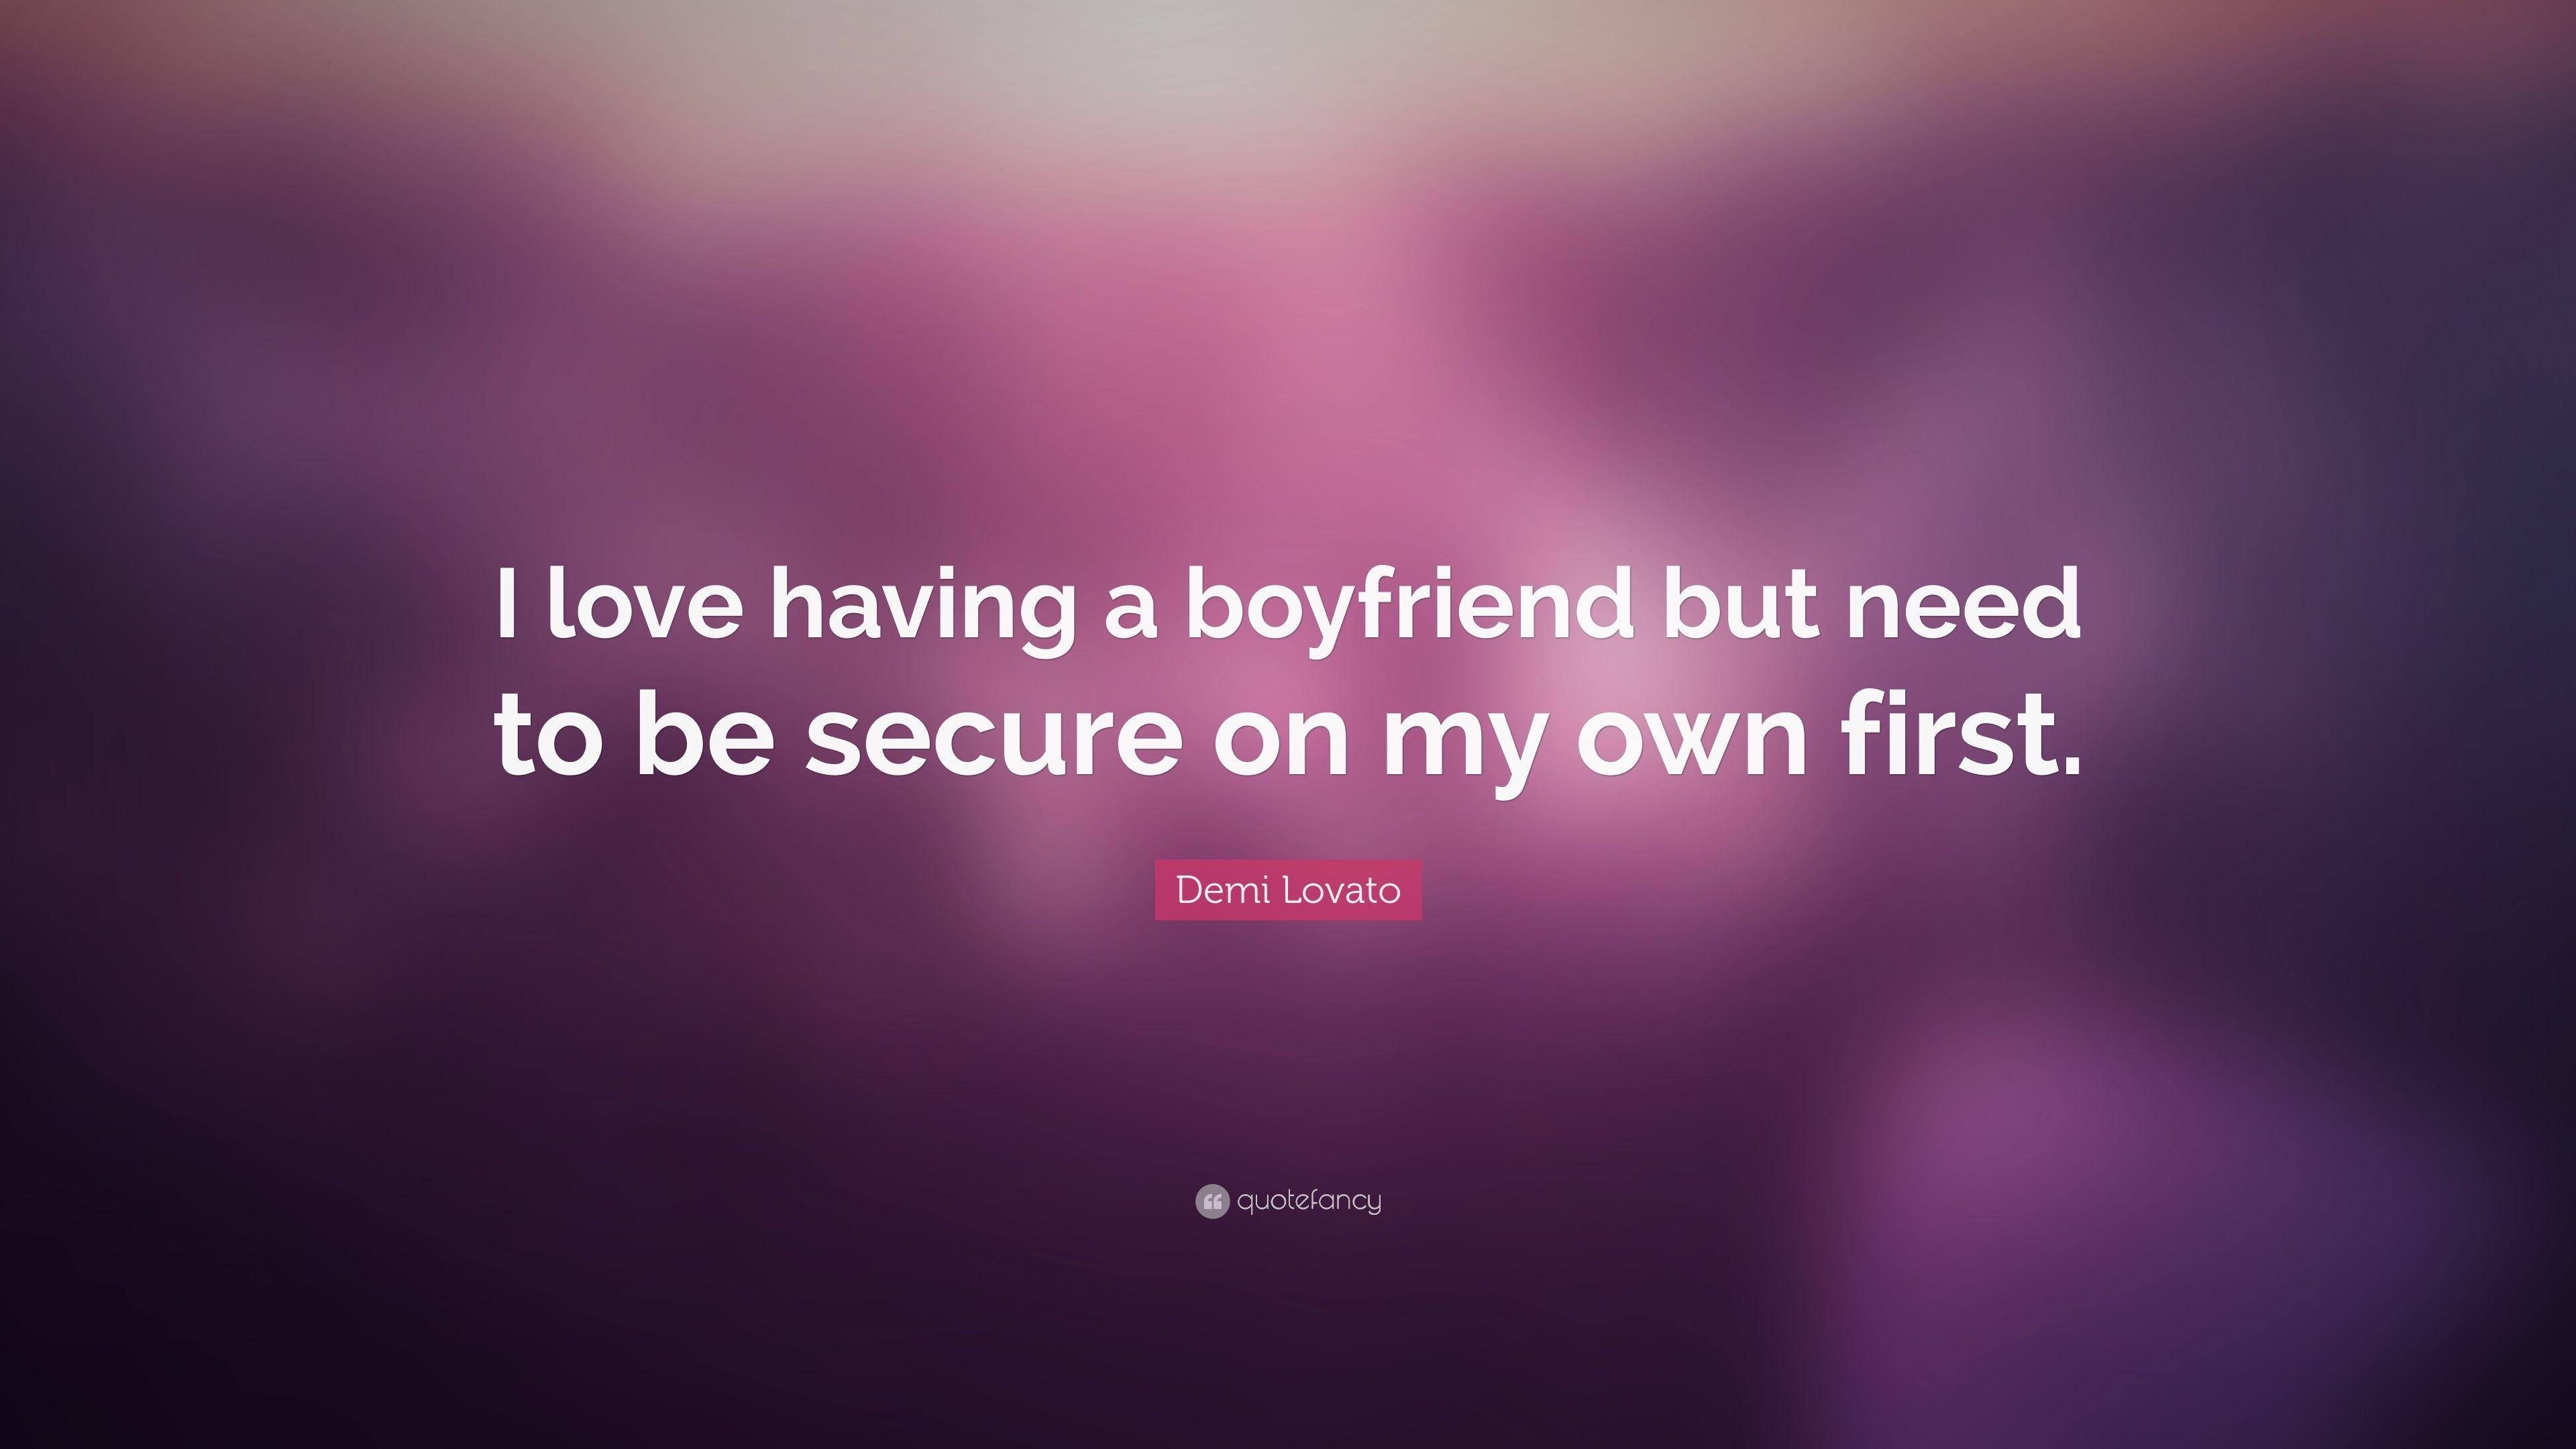 Demi Lovato Quote: “I love having a boyfriend but need to be